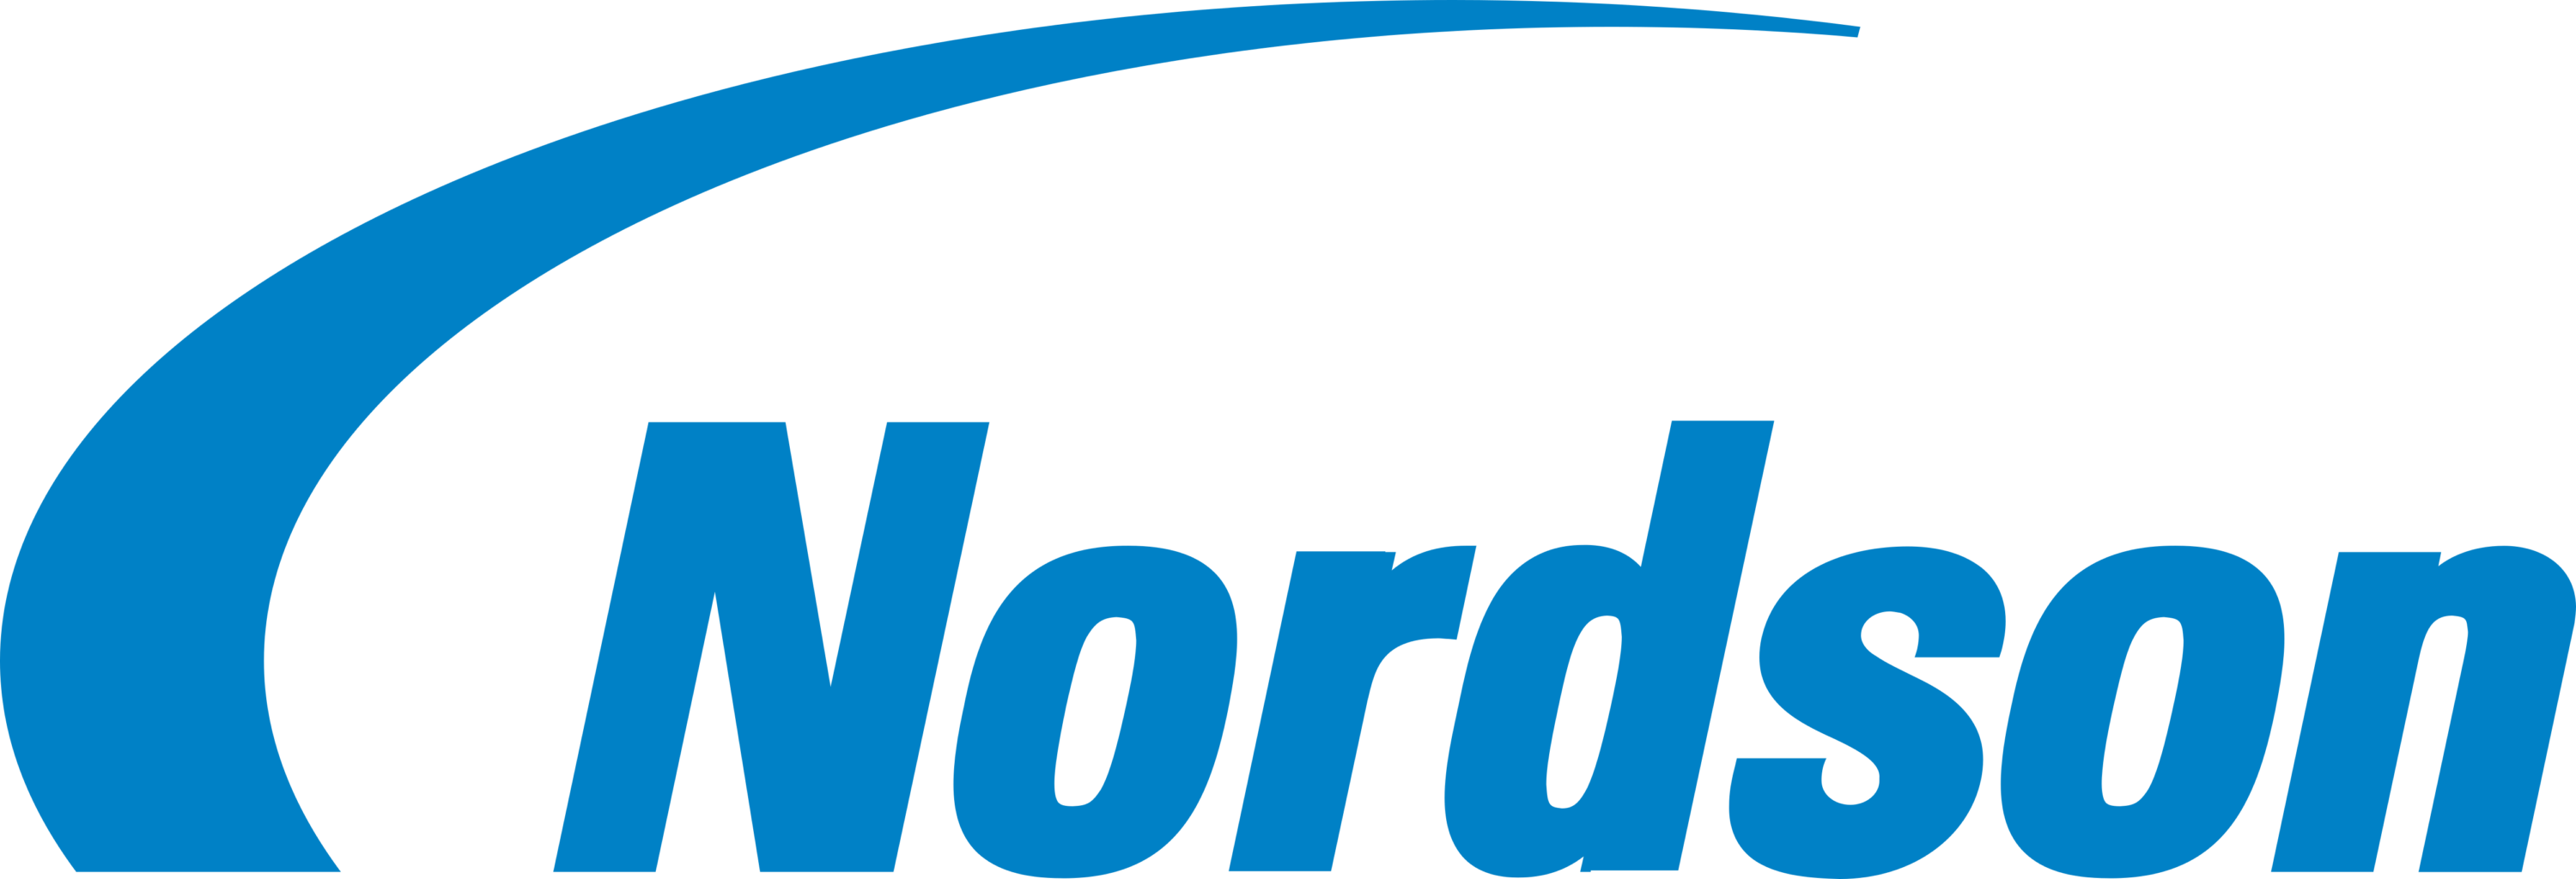 Nordson Corporation Logo